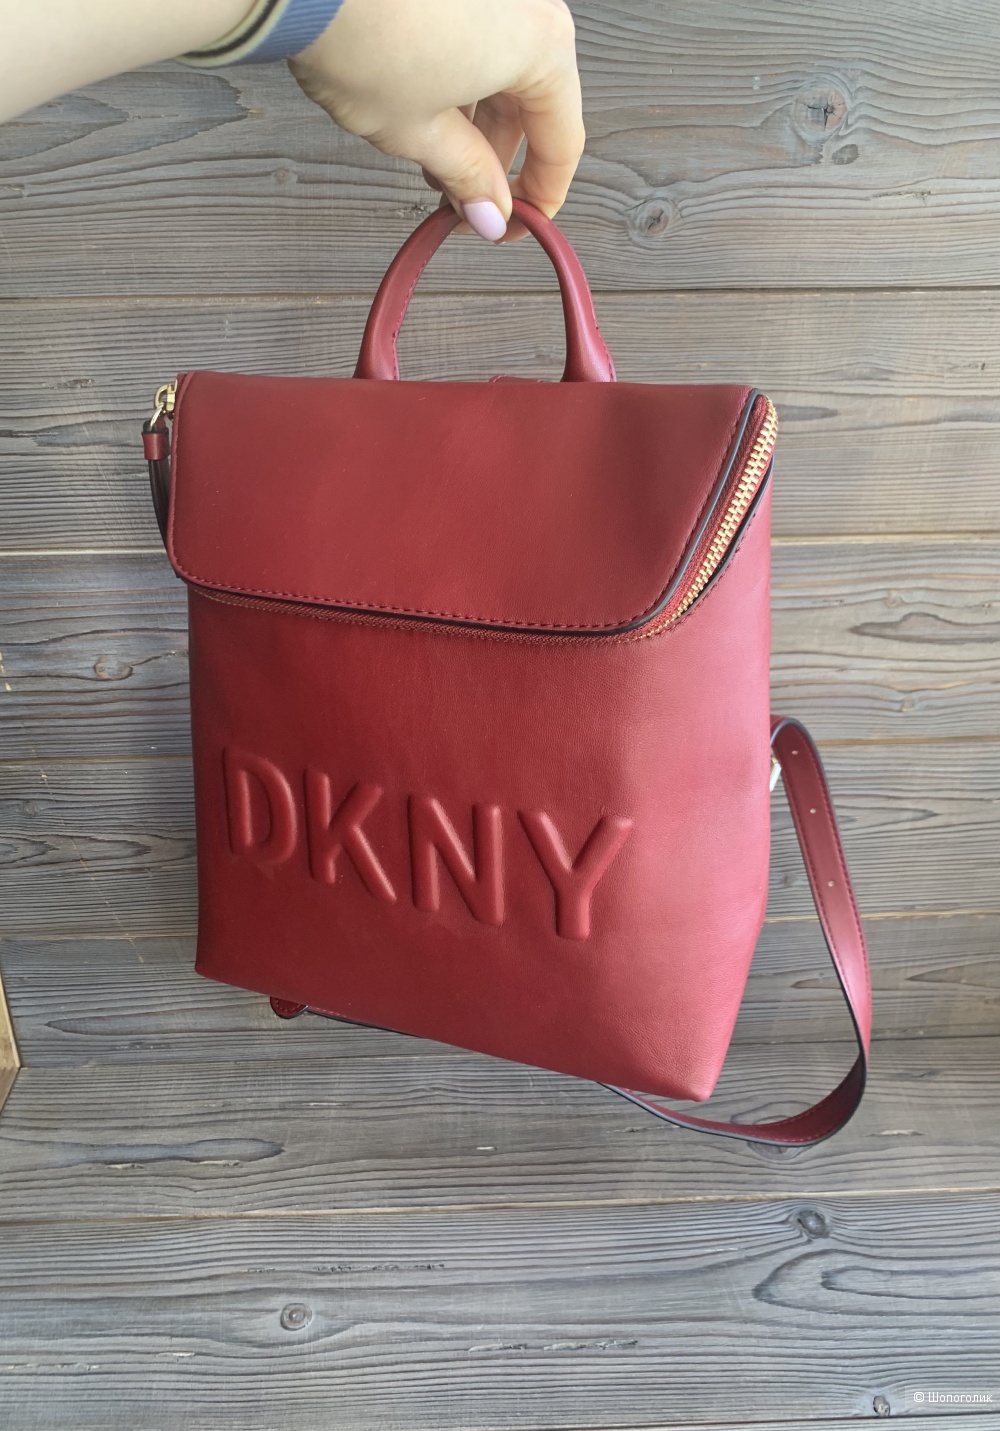 Рюкзак DKNY